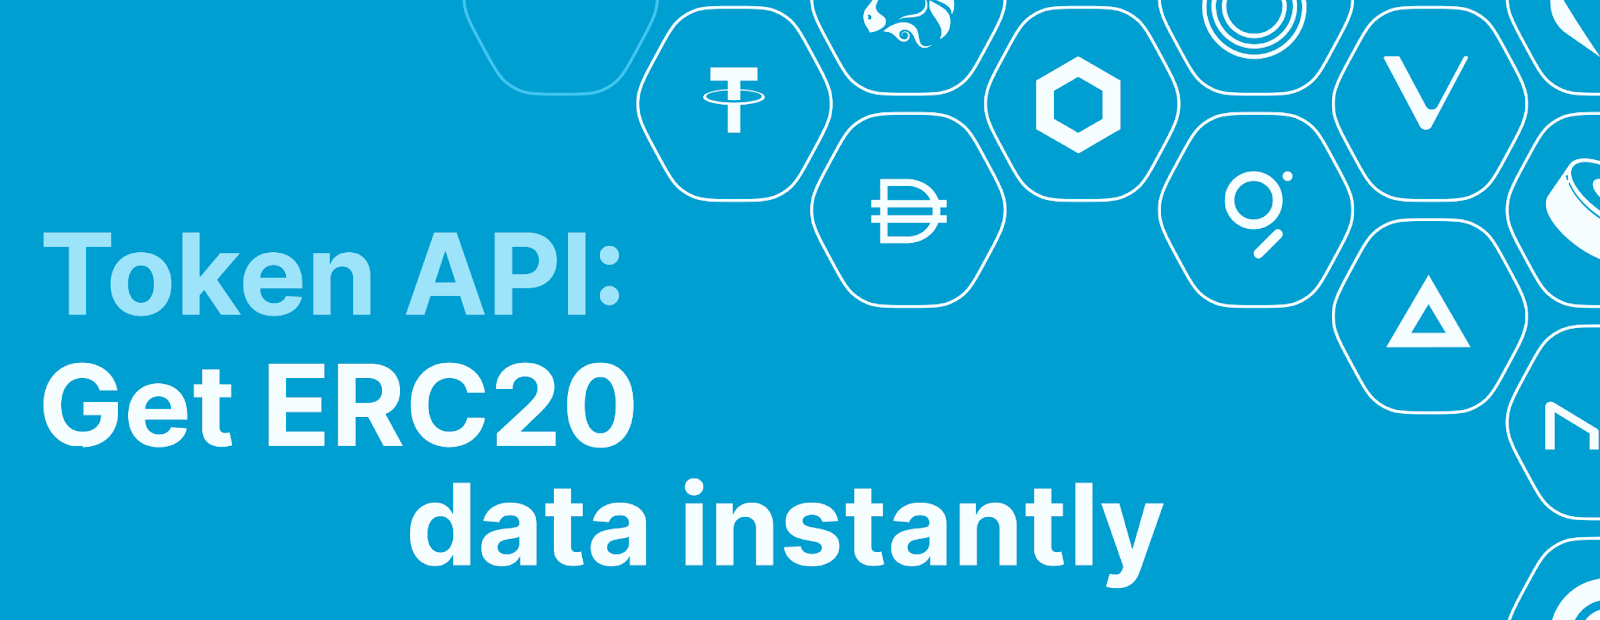 ERC20 Token API get data instantly. 